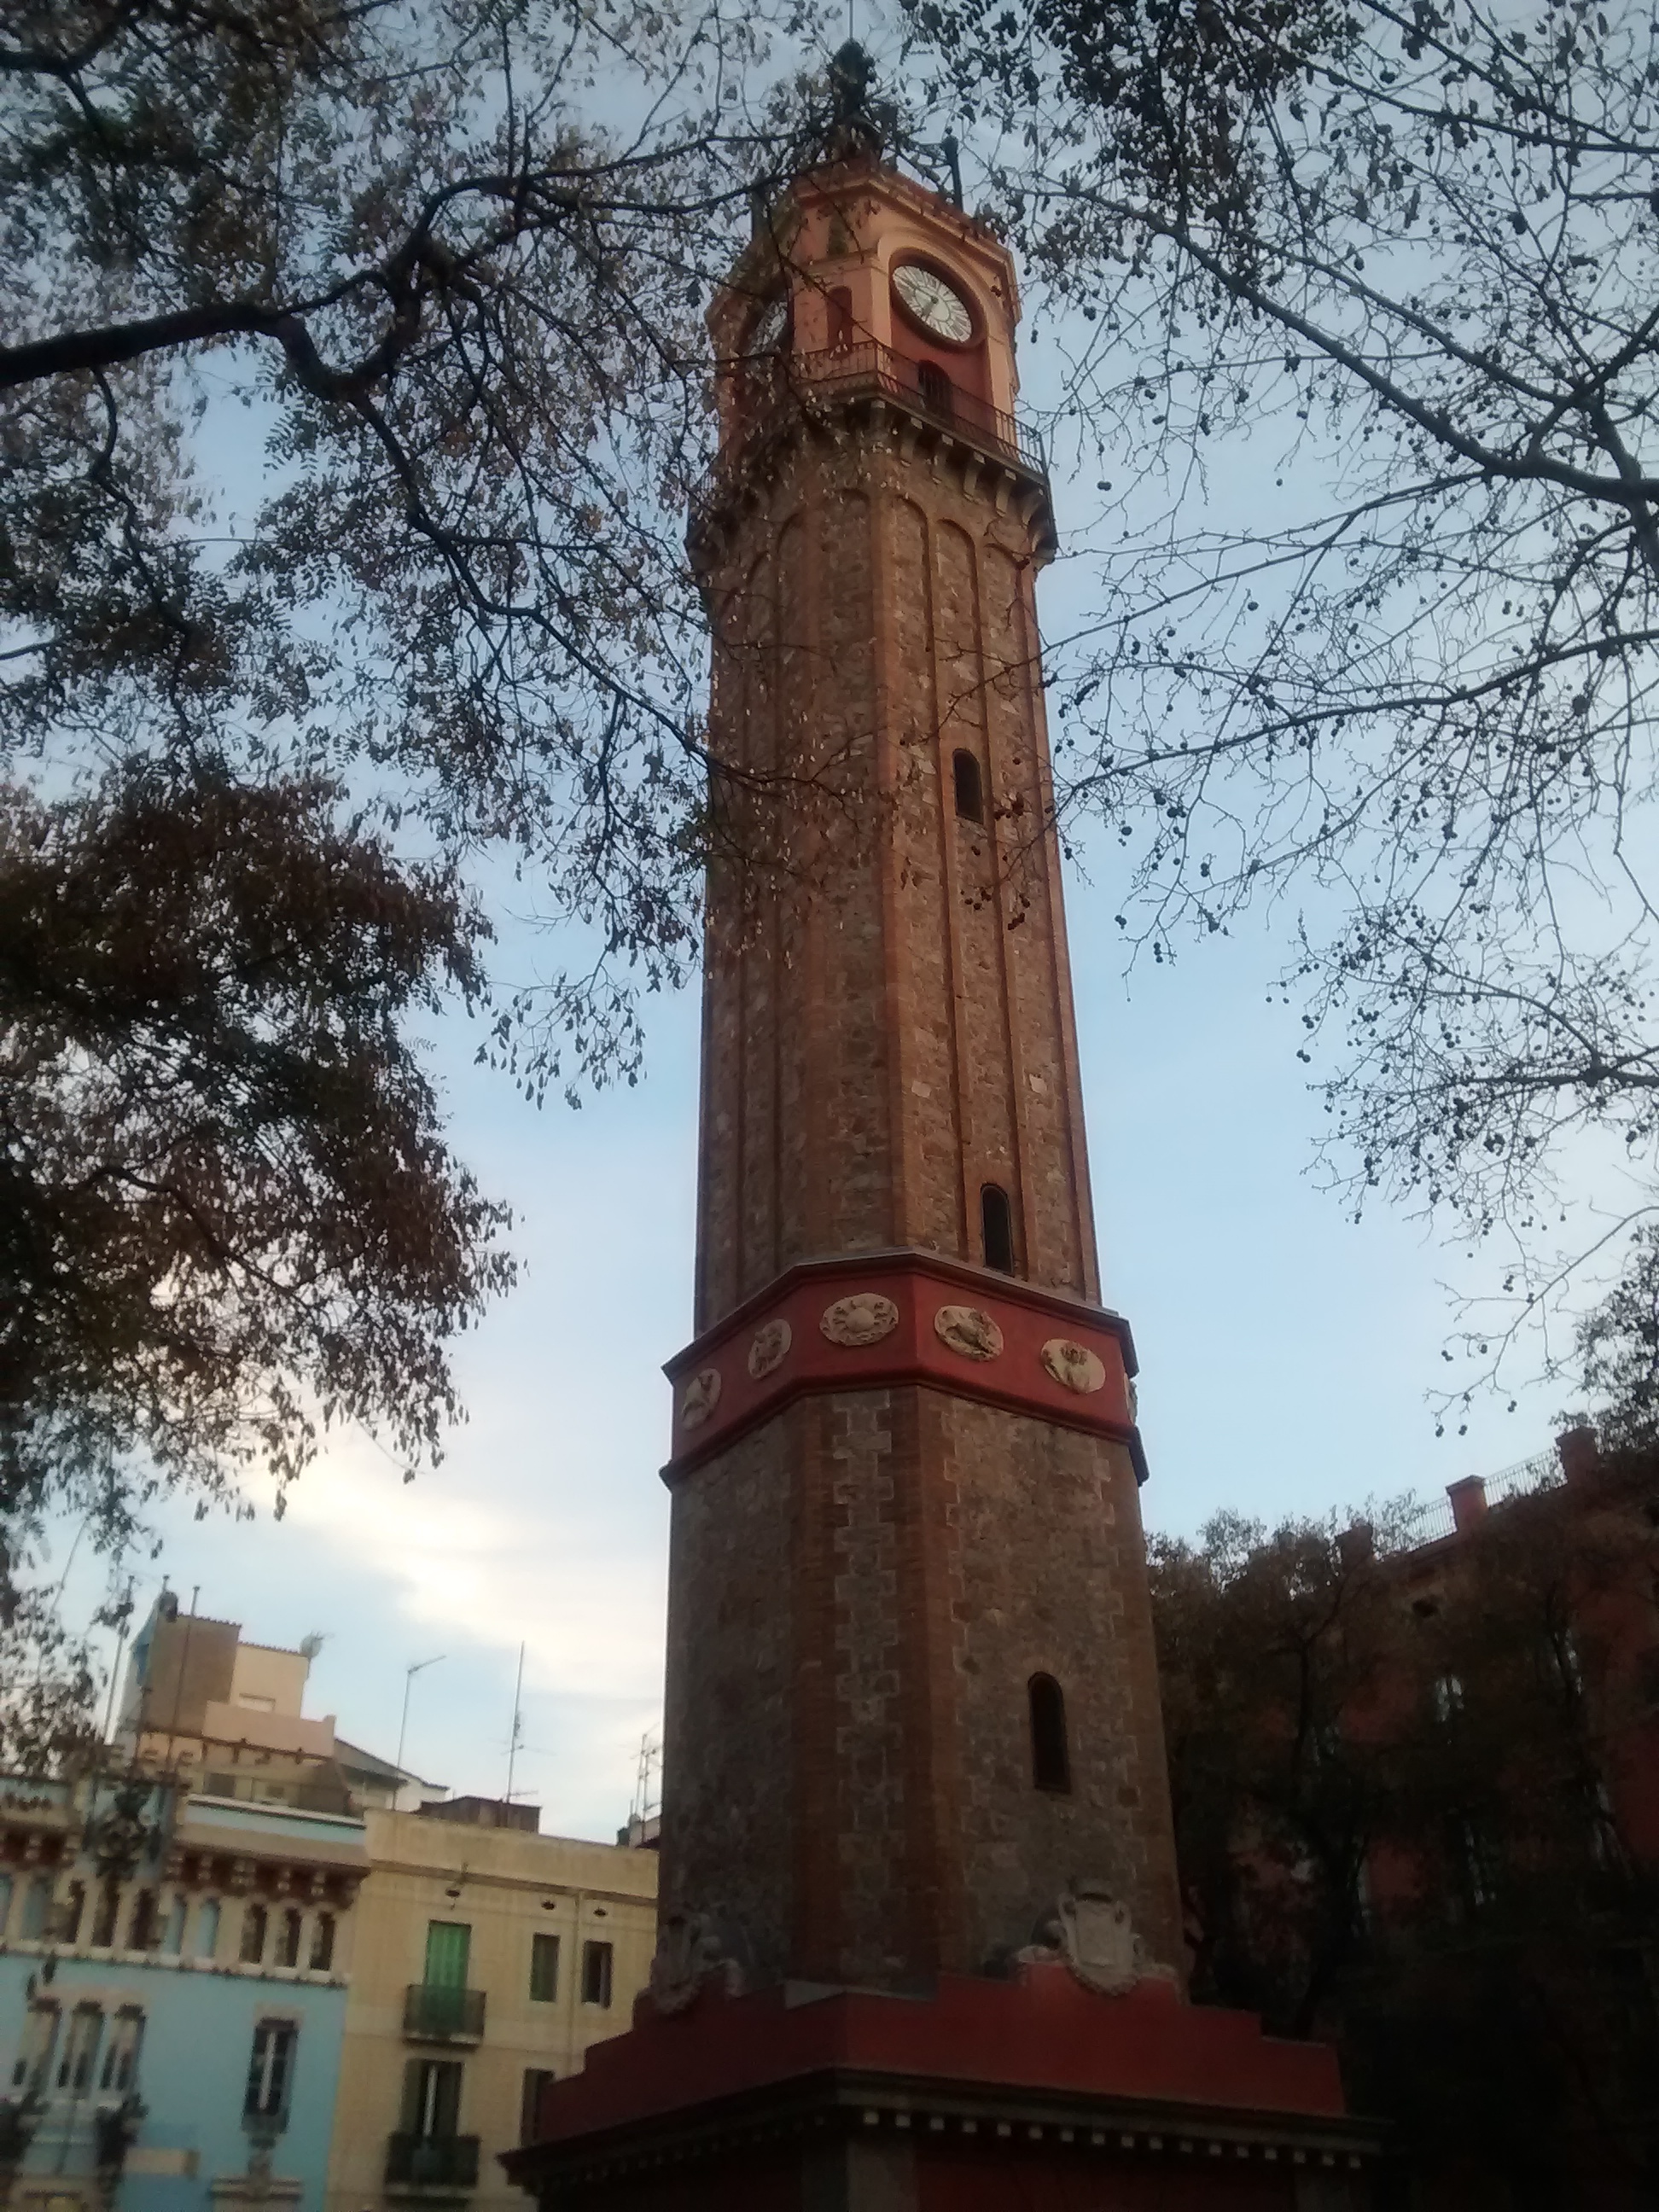 Tower, Gracia, Barcelona